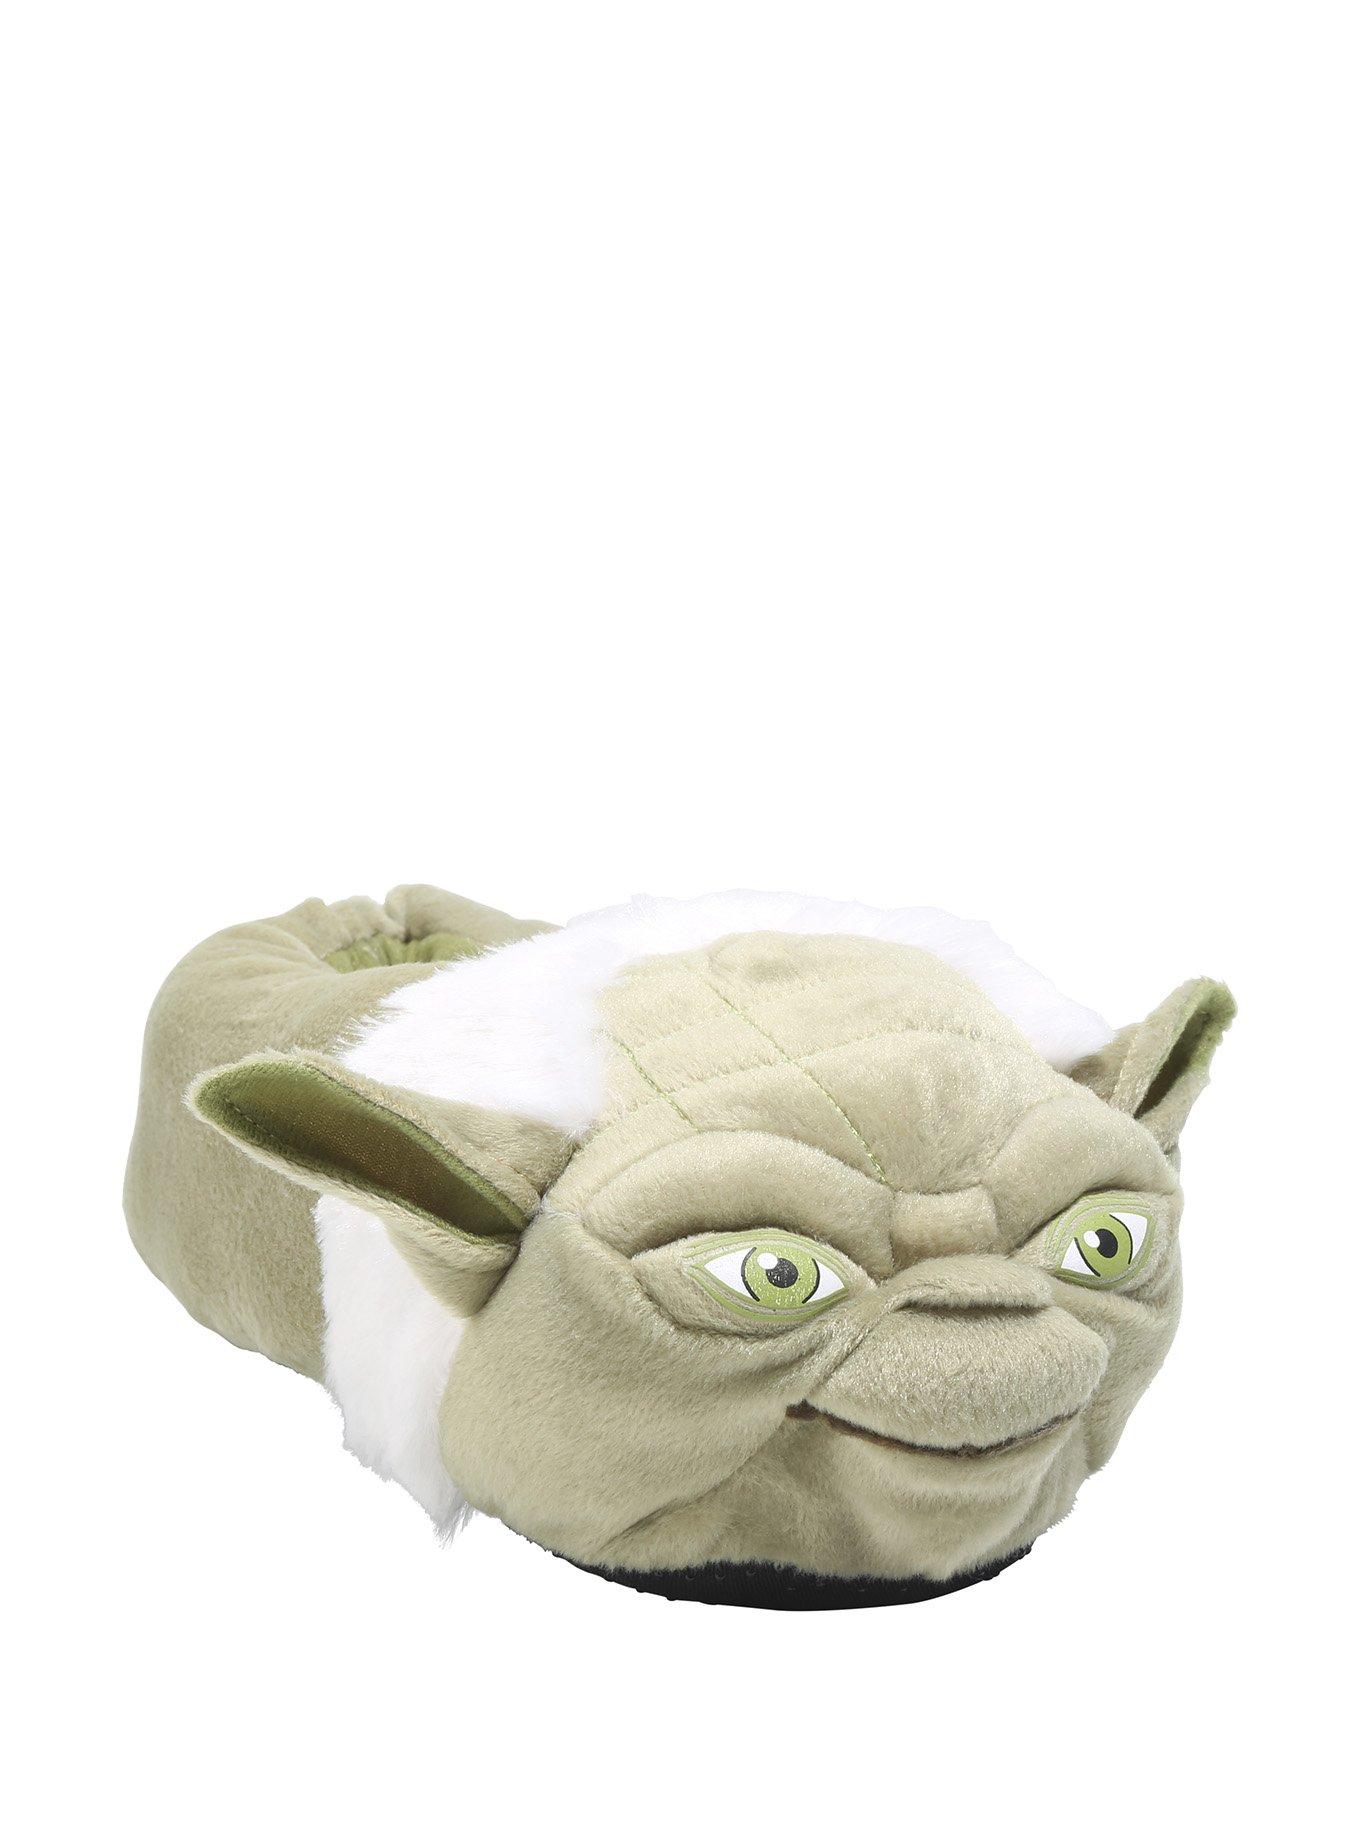 Star Wars Yoda Plush Slippers, GREEN, hi-res